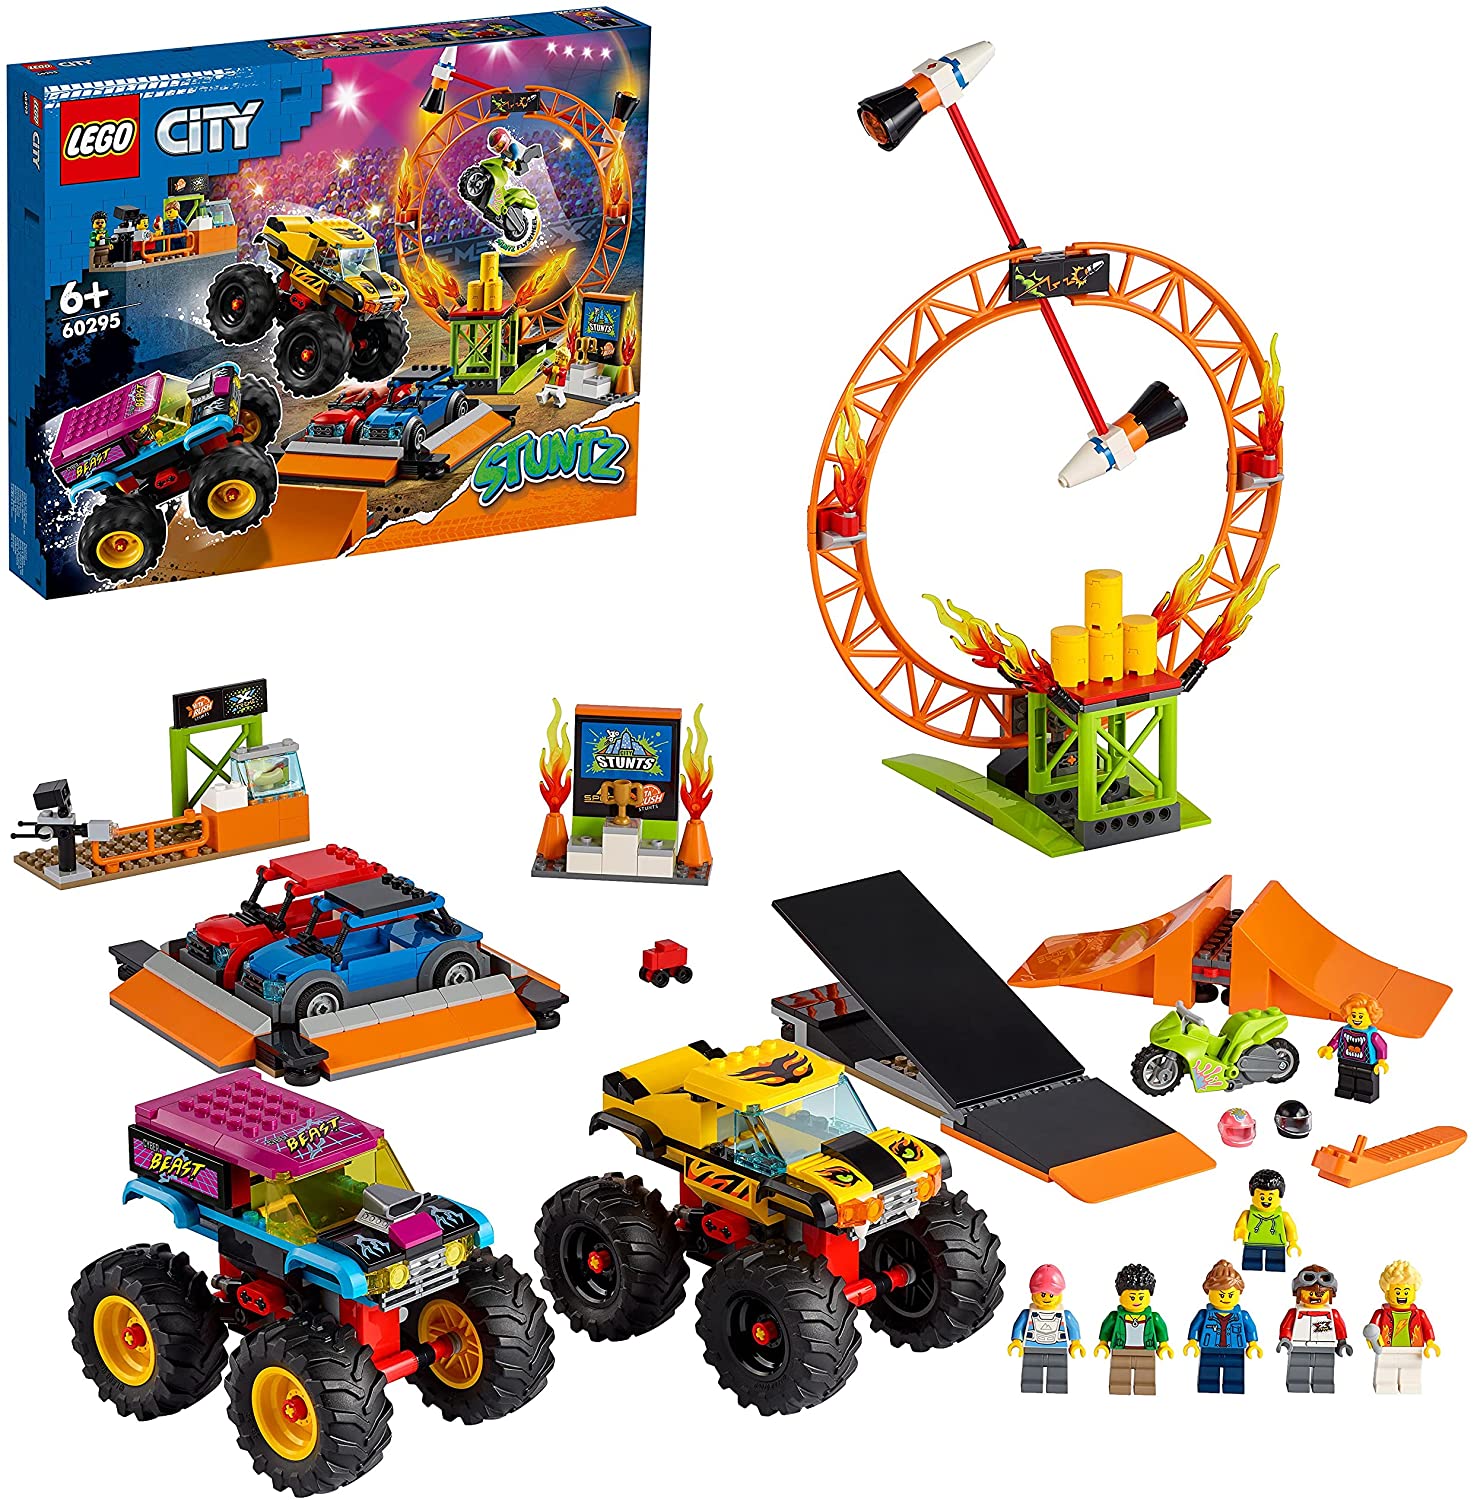 LEGO 60295 City Stuntz Stuntshow Arena, Set of 2 Monster Trucks, 2 Toy Cars